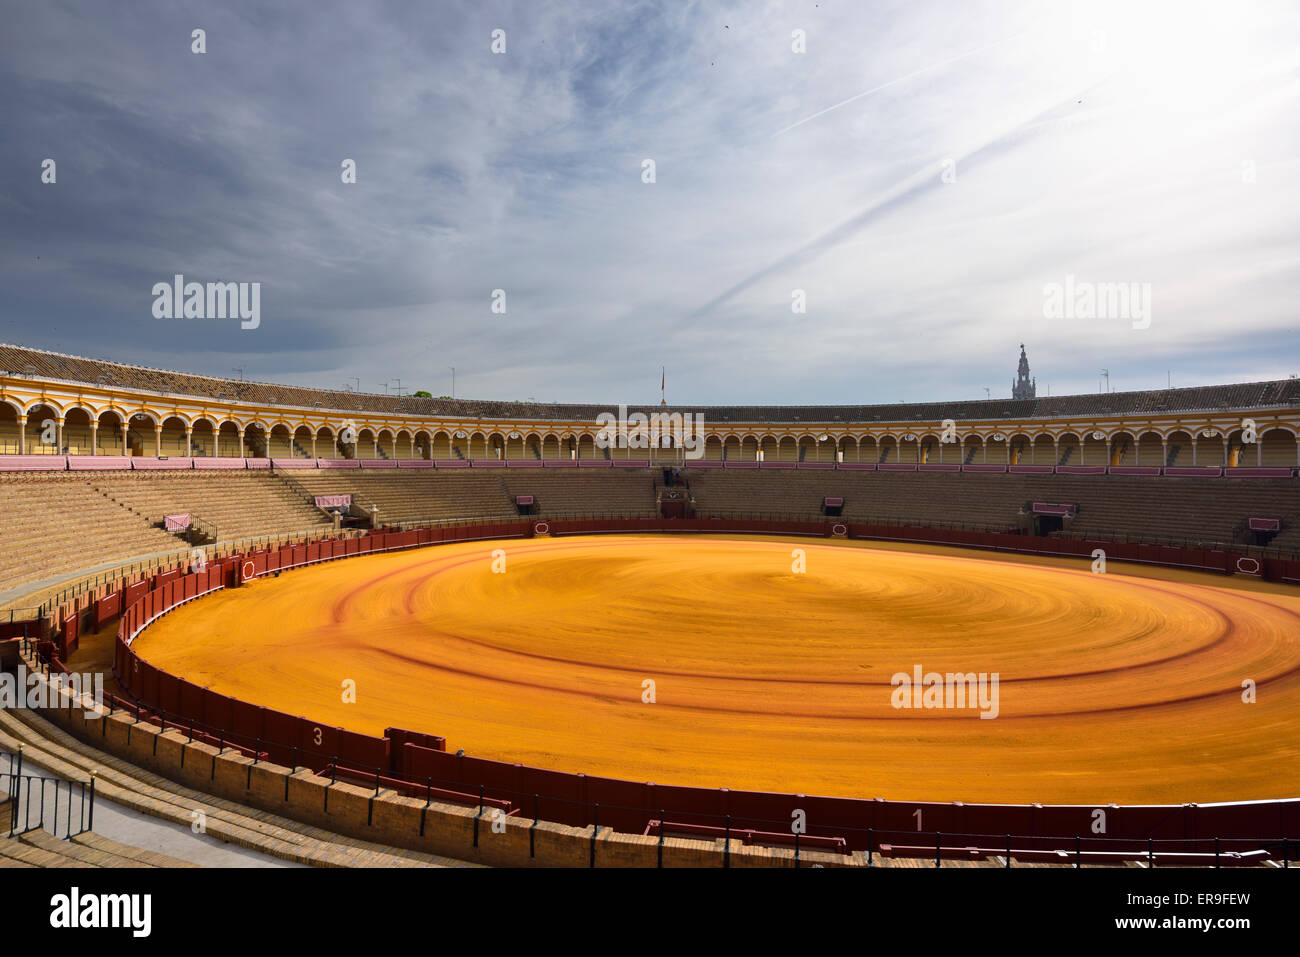 Golden präparierten Sand und leer steht bei den ovalen Sevilla Stierkampf ring mit Giralda Turm Stockfoto